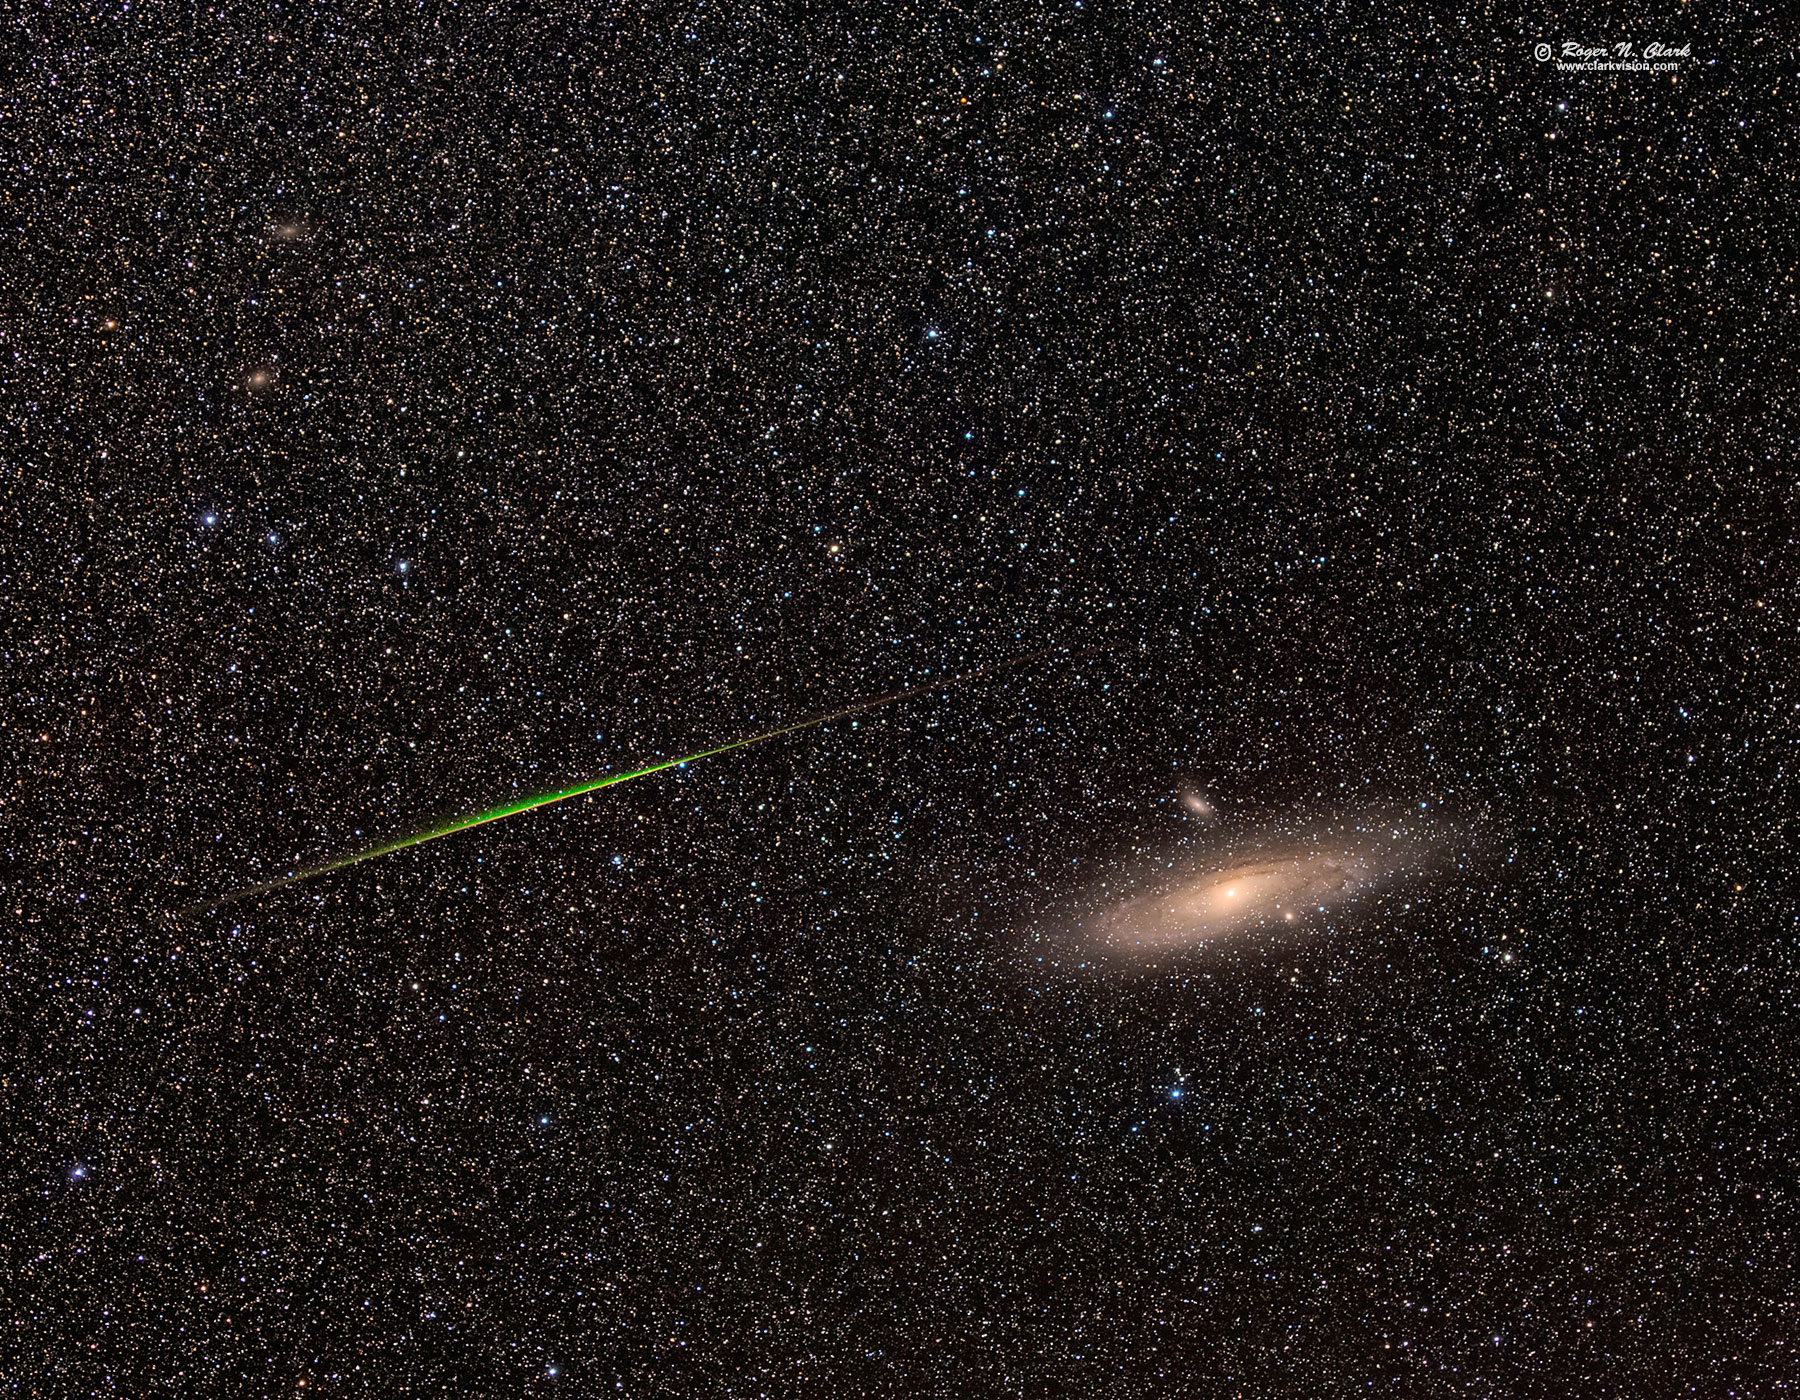 image m31+meteor_105mm-av40-20min-c08.13.2018-img5552-91.e-0.5xrc1-1800s.jpg is Copyrighted by Roger N. Clark, www.clarkvision.com